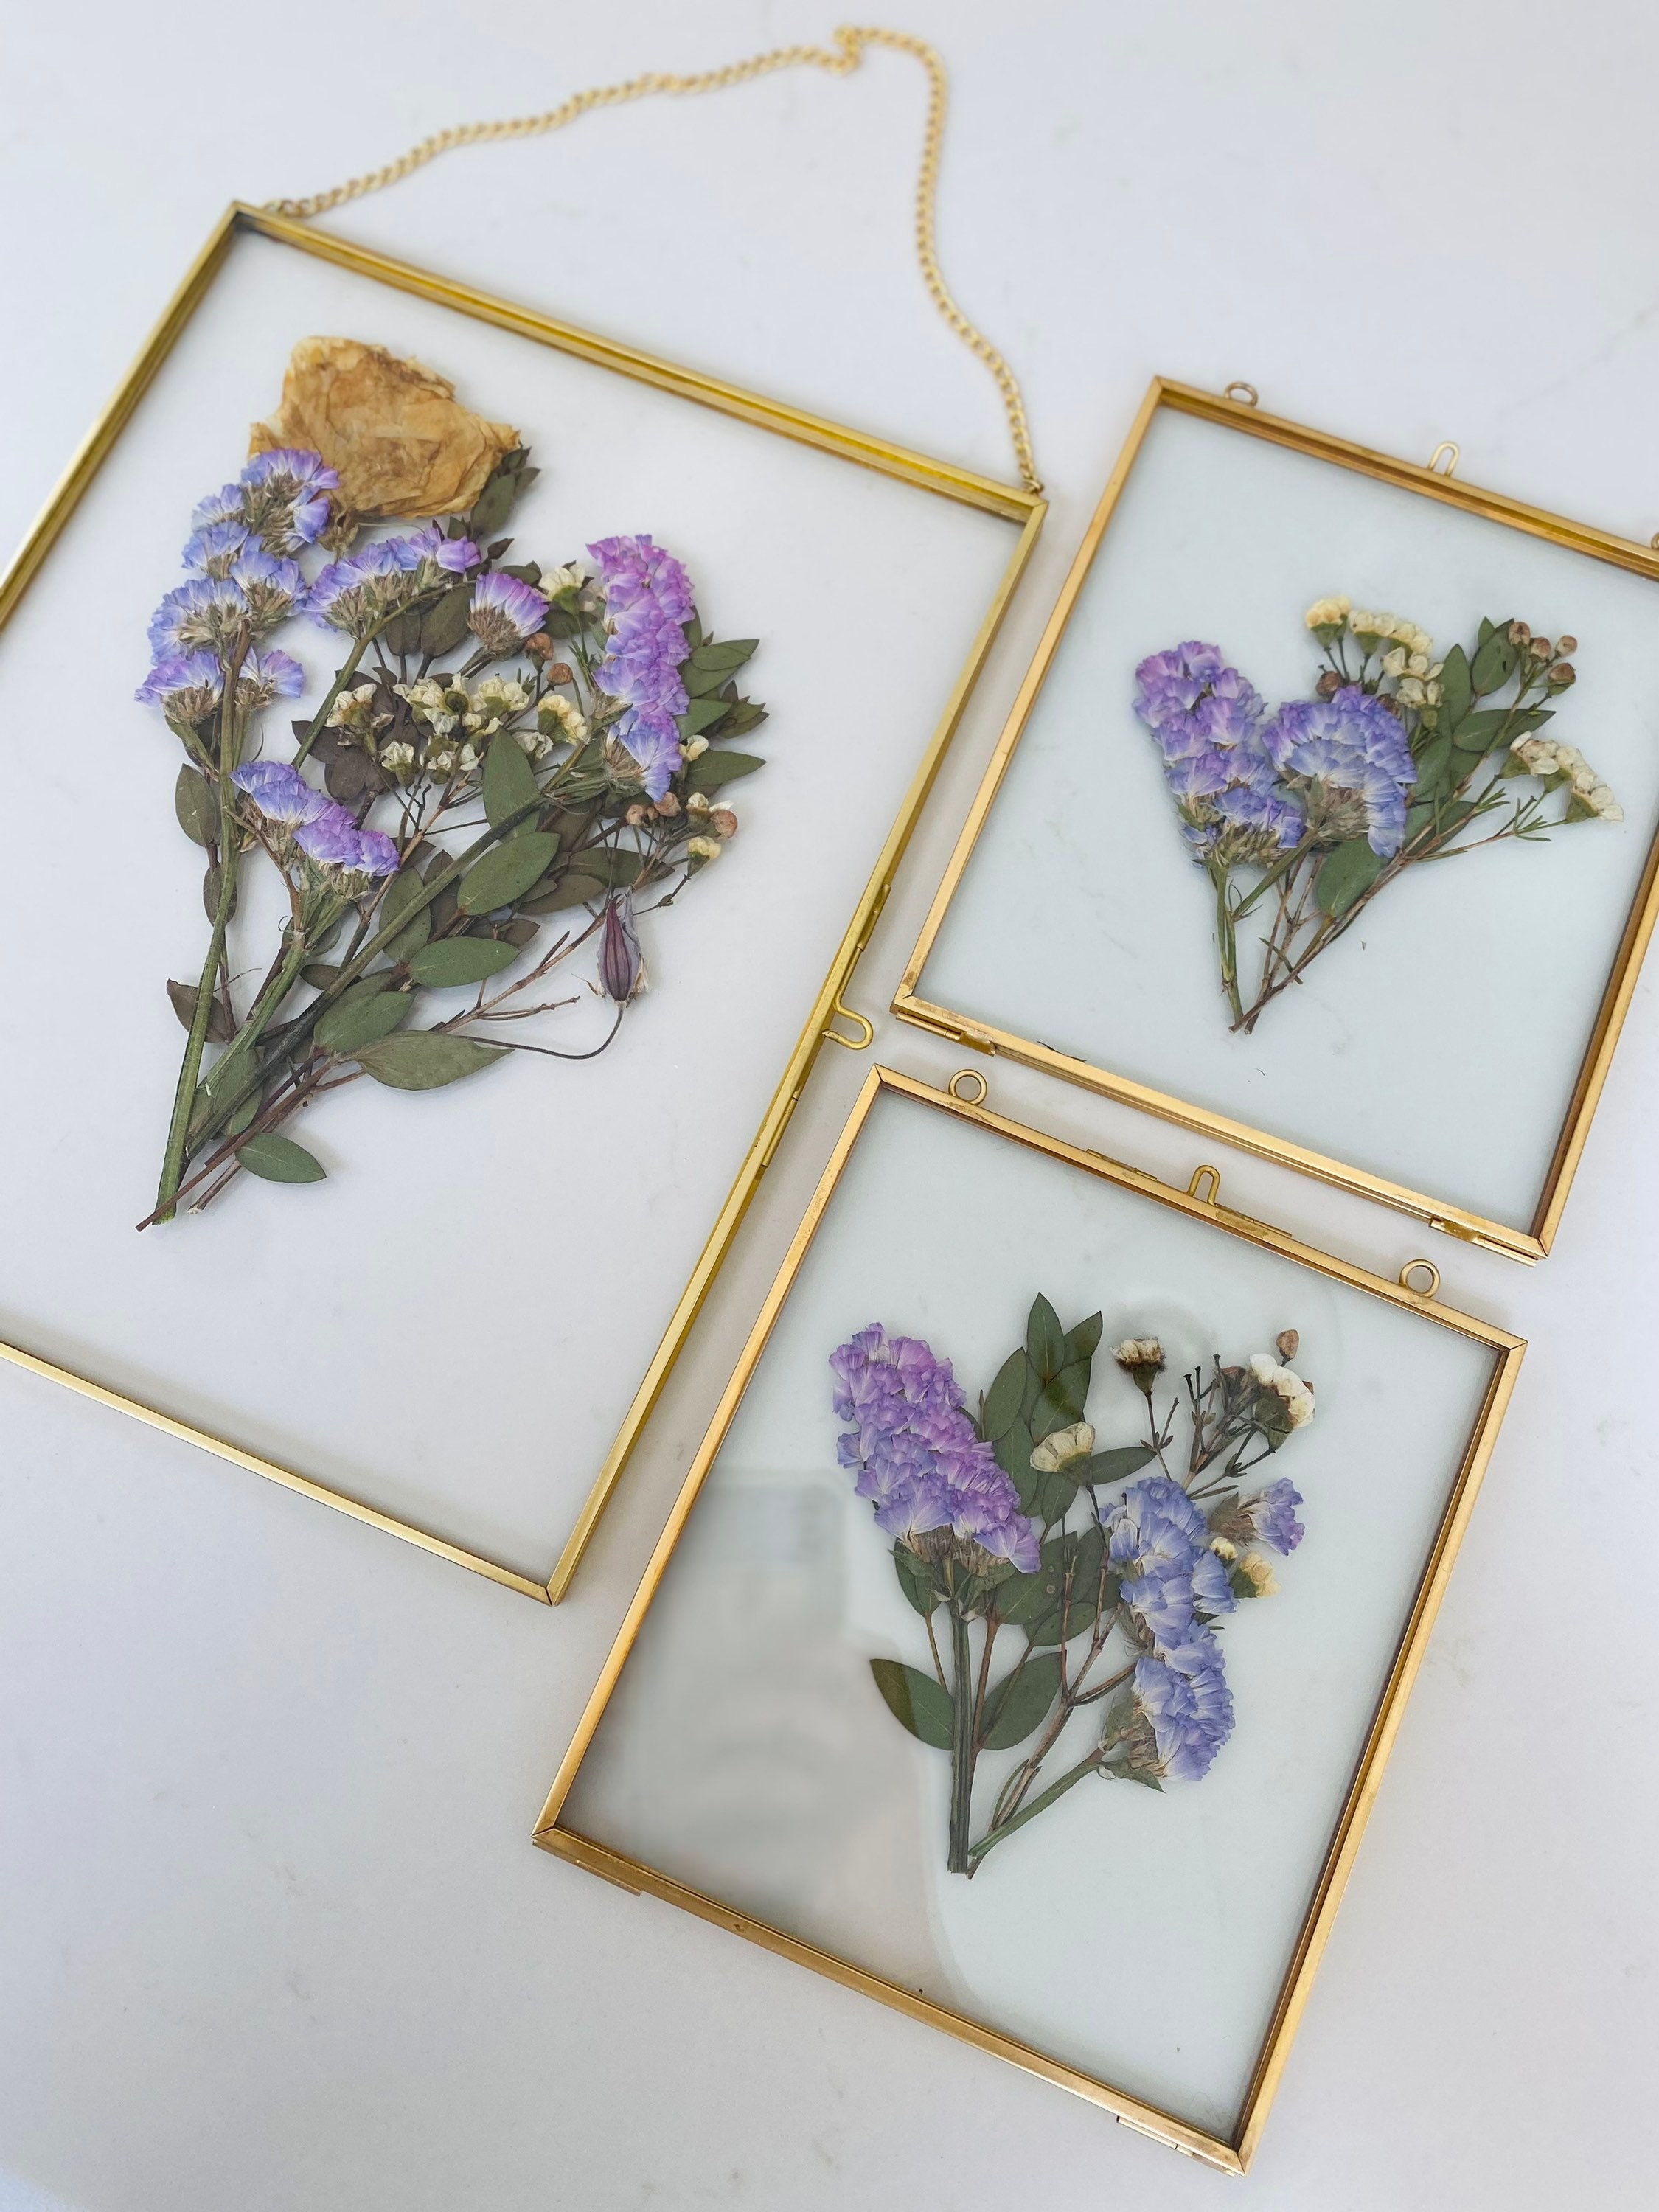 How To Make A Pressed Flower Frame - Contempfleury